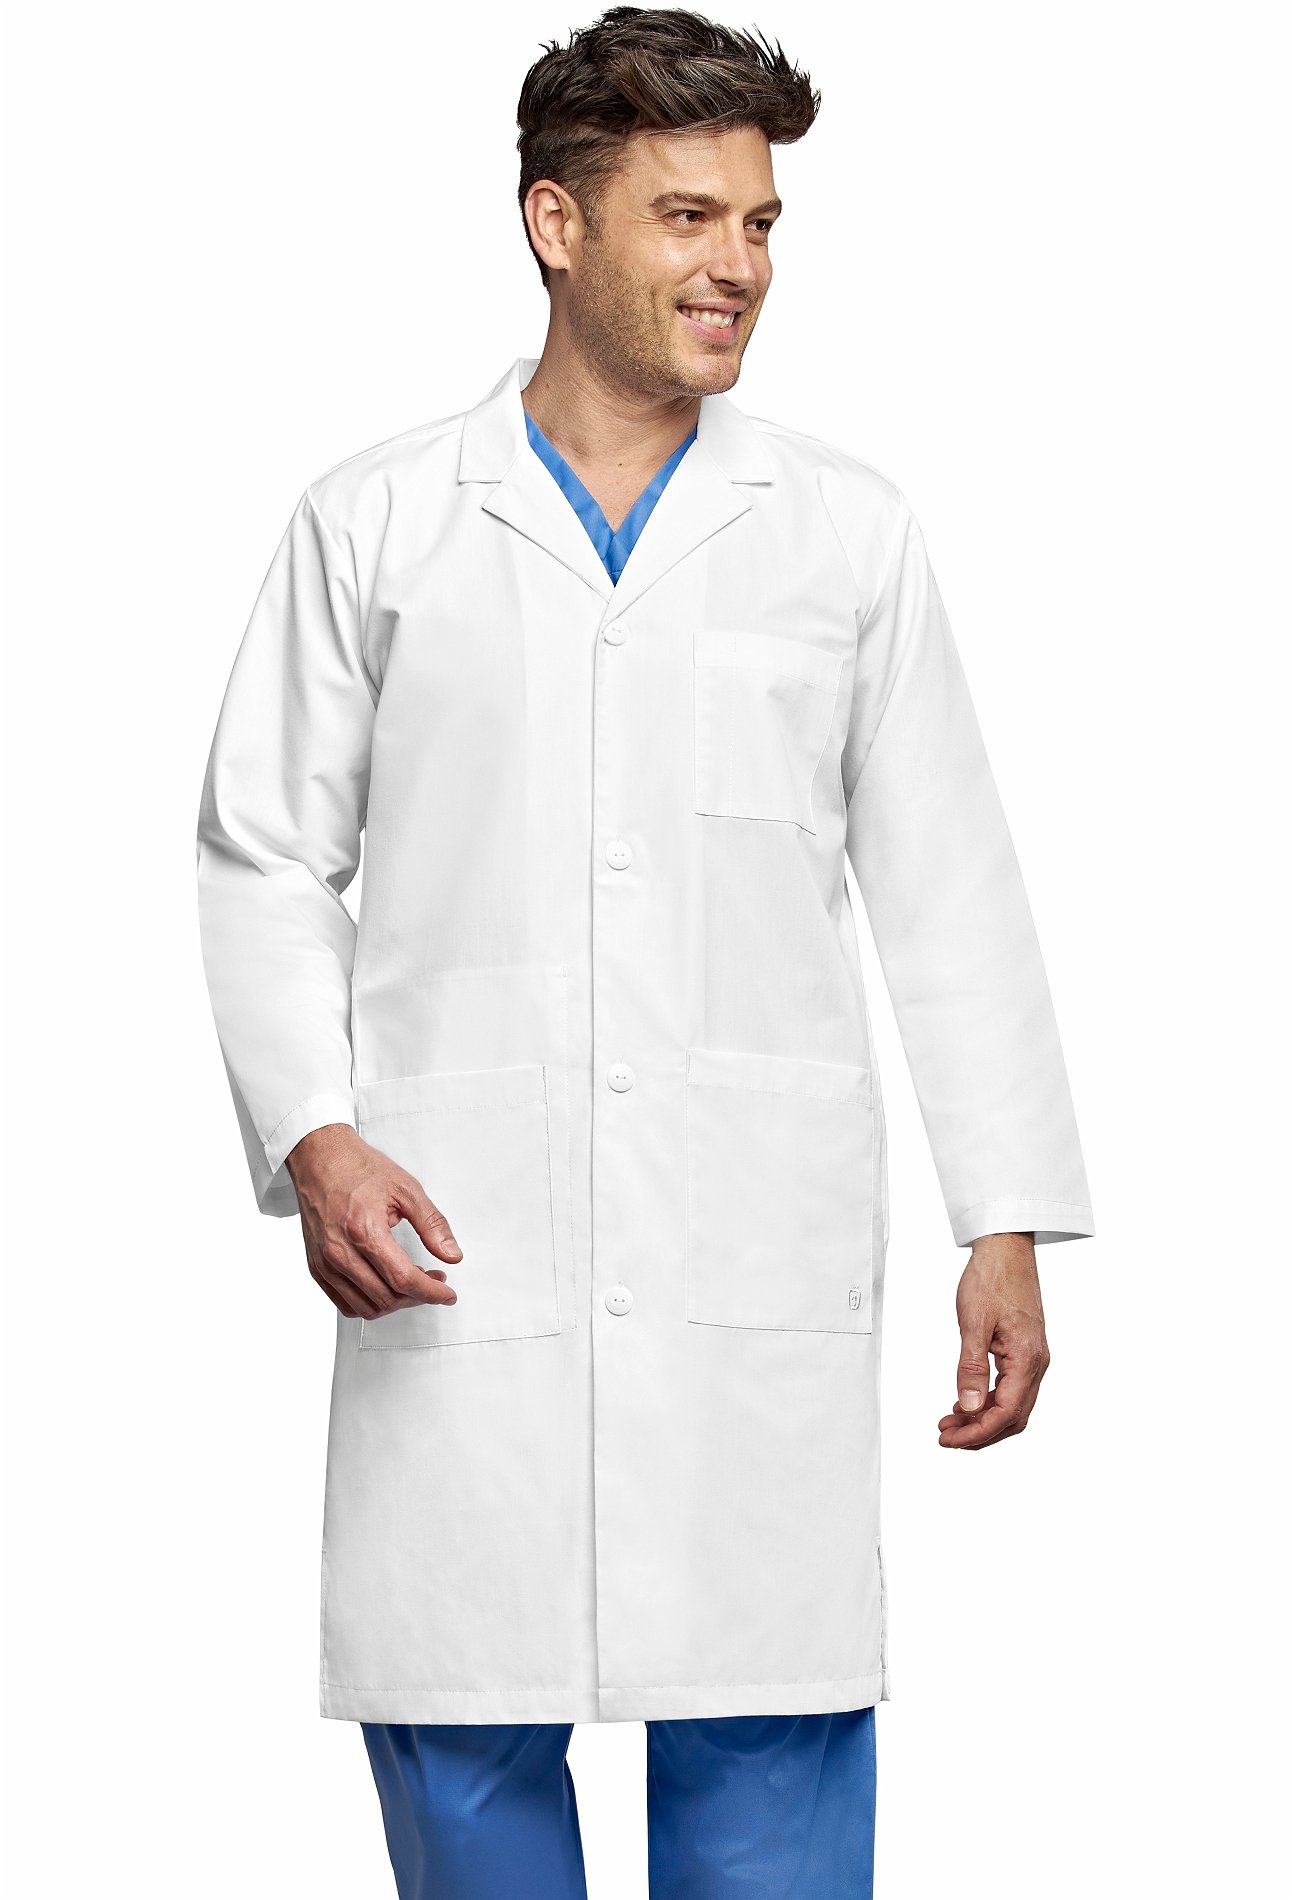 WonderWink Men's Long White Lab Coat-7302